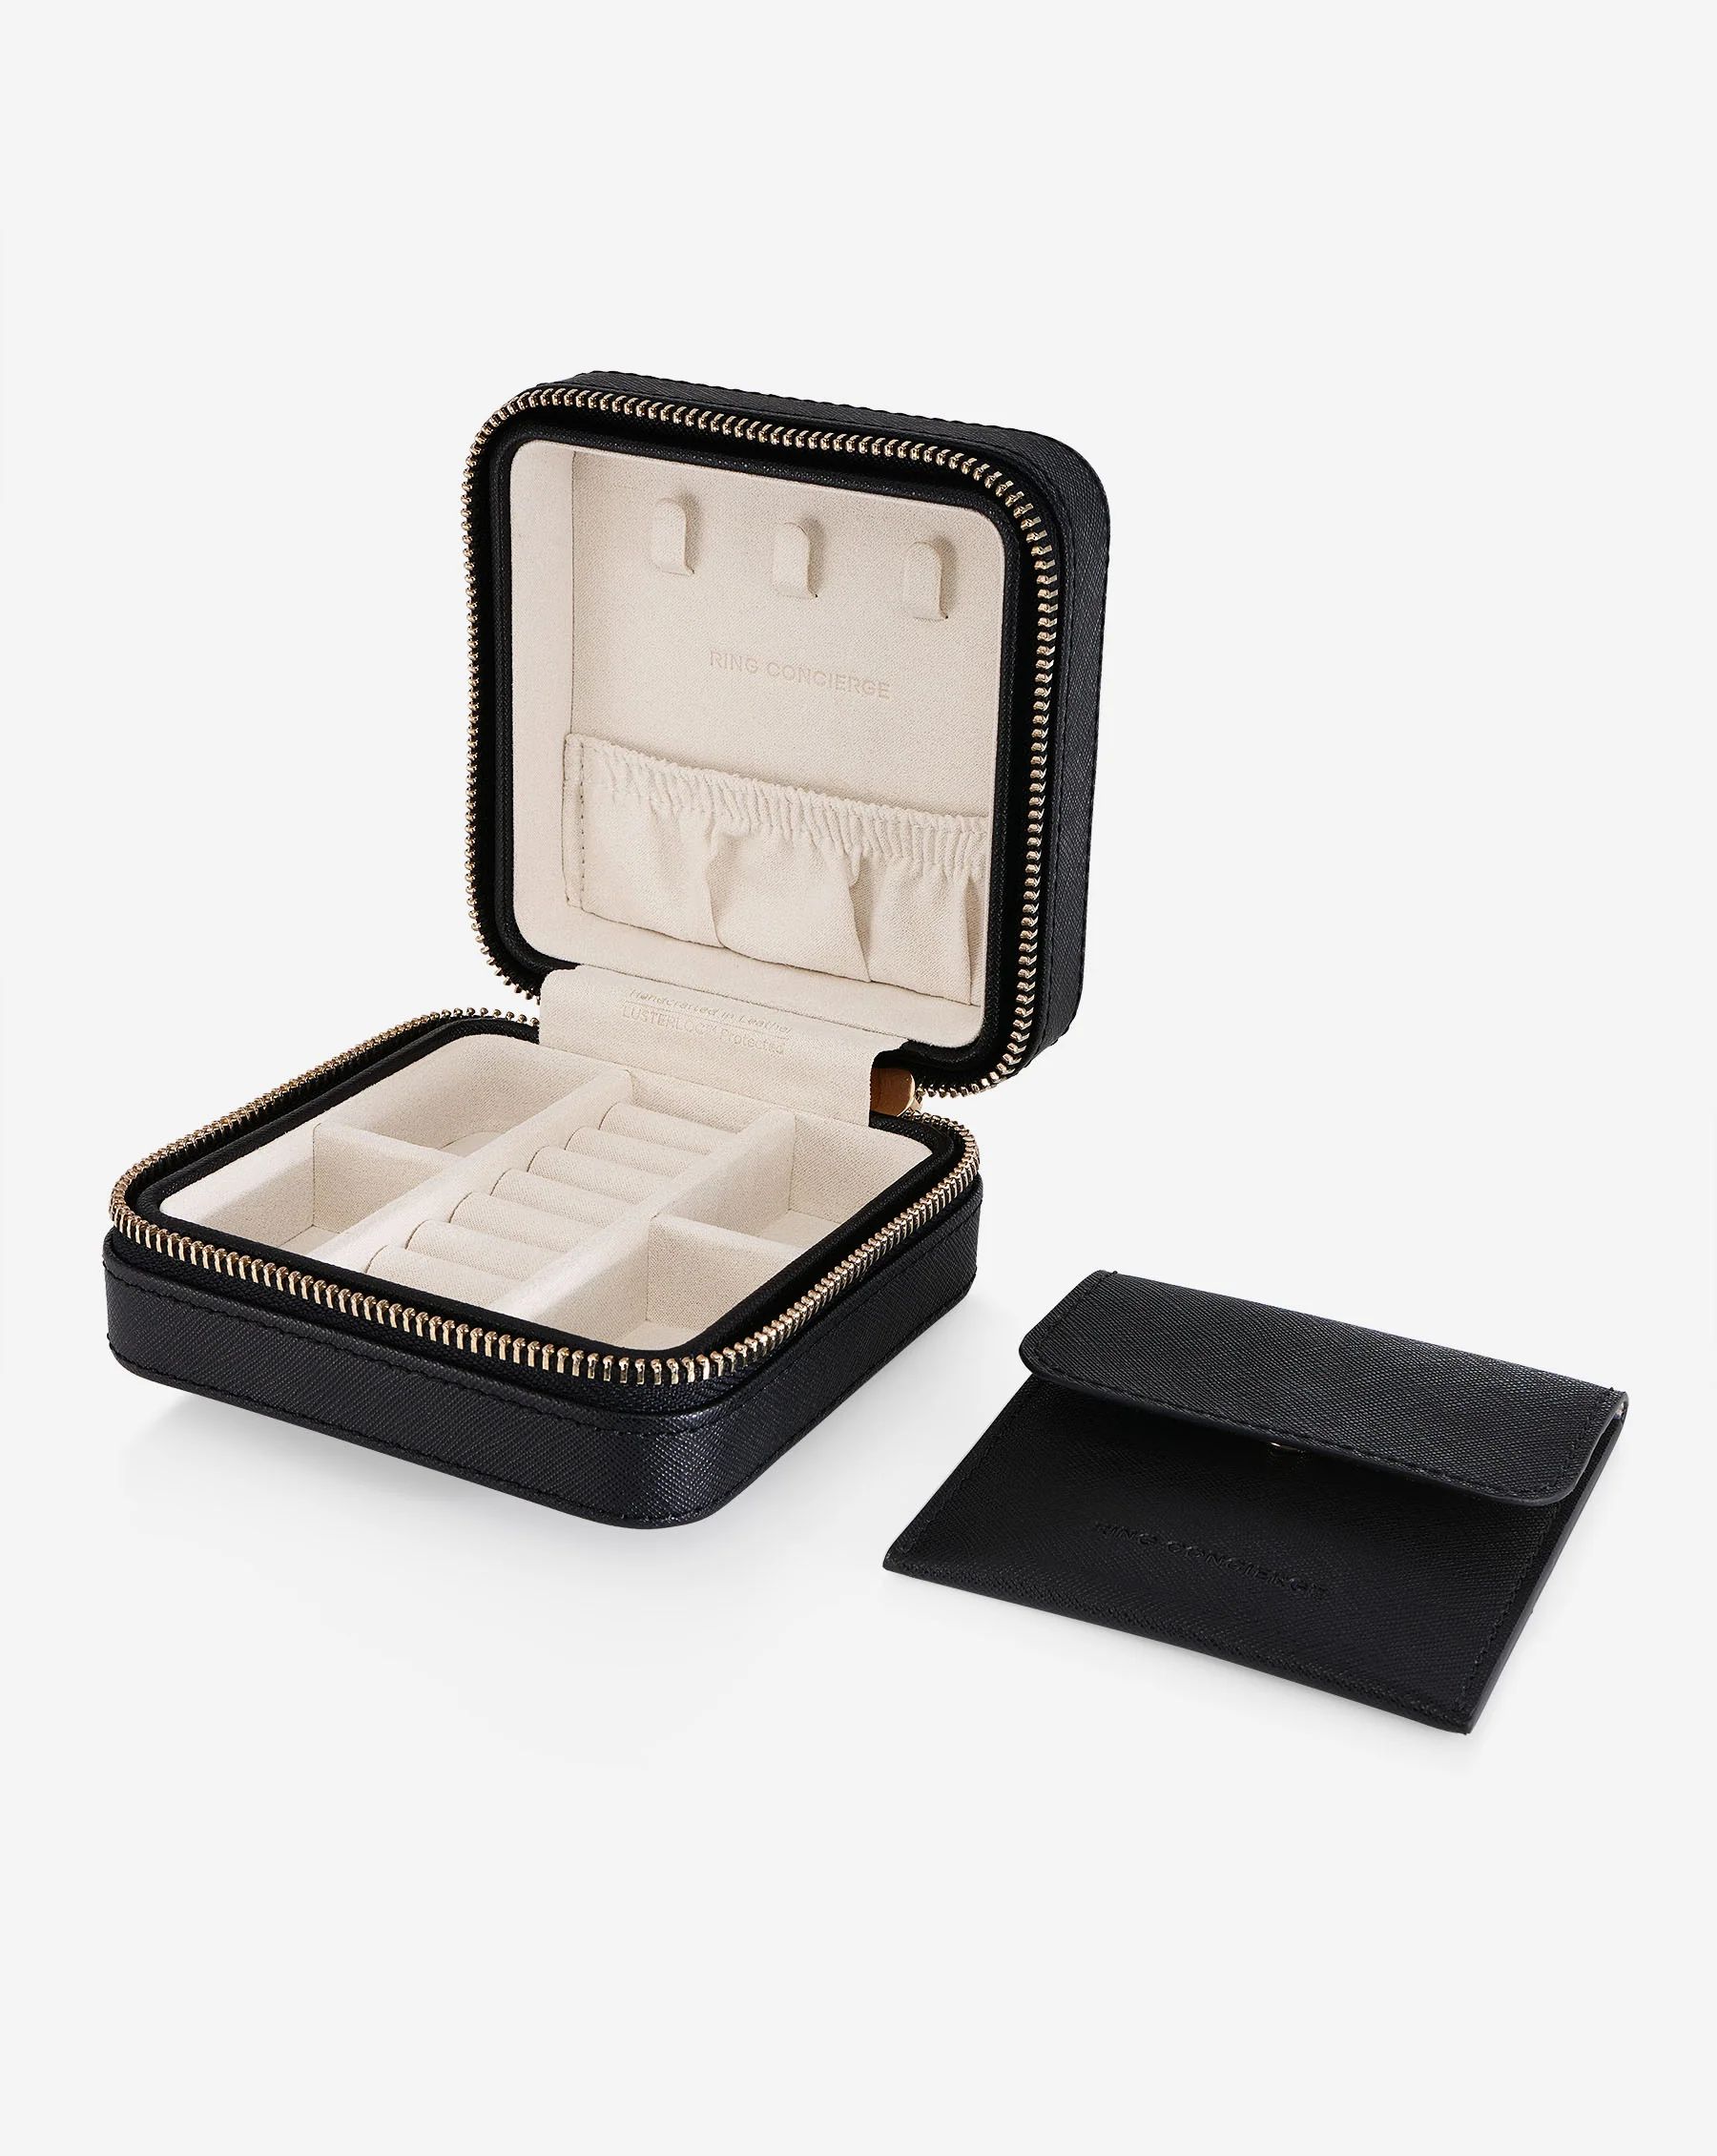 Mini Leather Jewelry Case | Ring Concierge